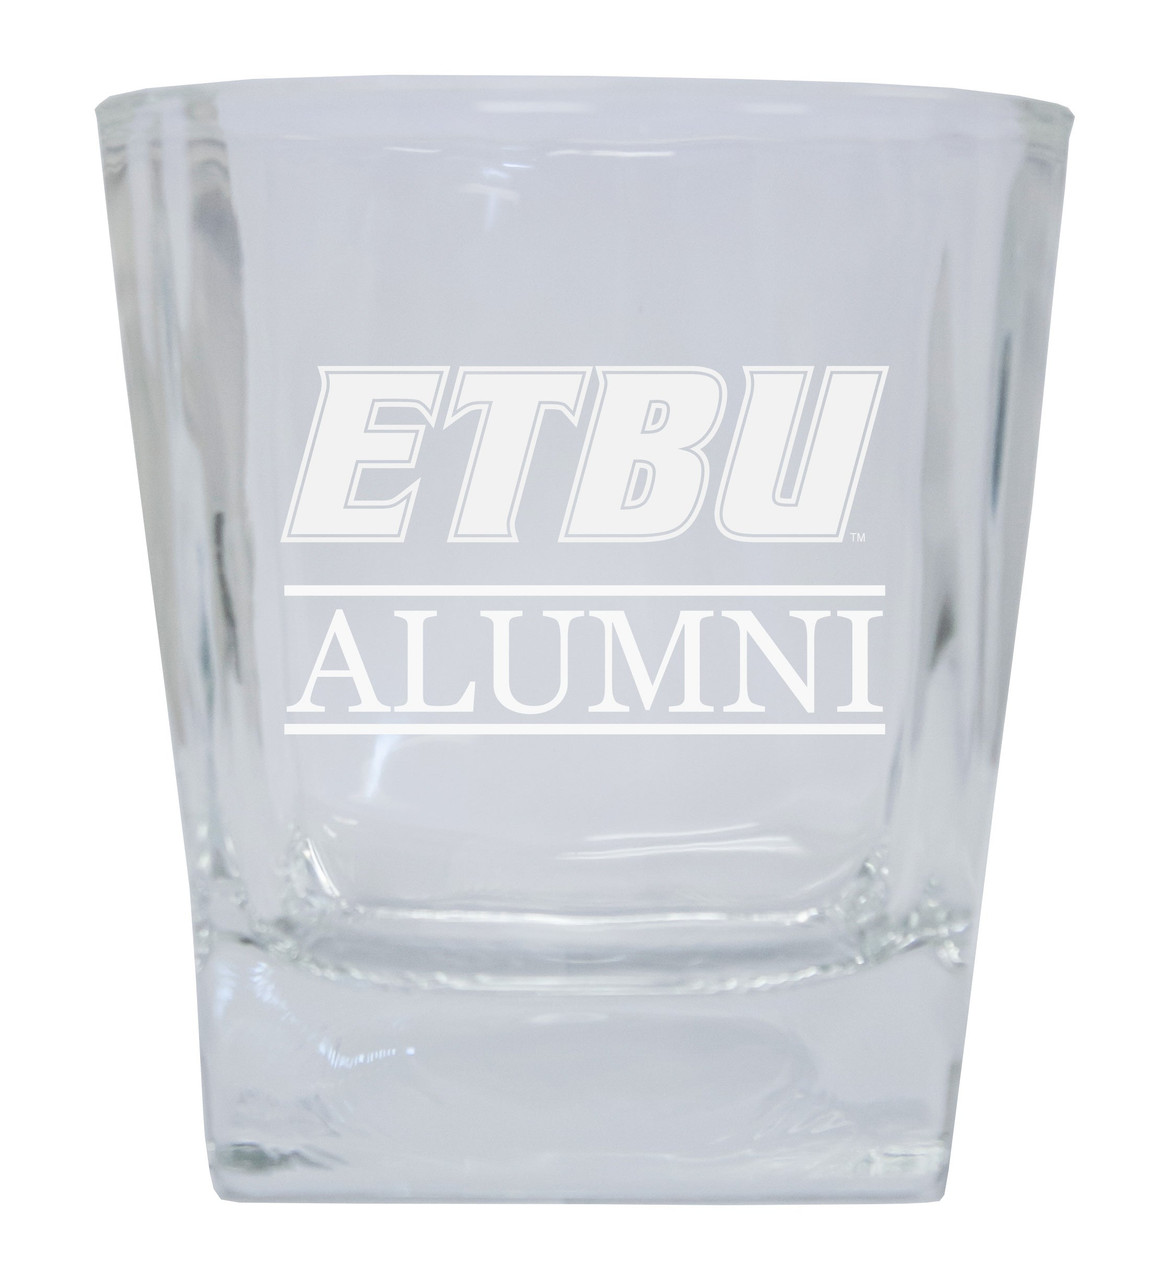 East Texas Baptist University Etched Alumni 5 oz Shooter Glass Tumbler 4-Pack